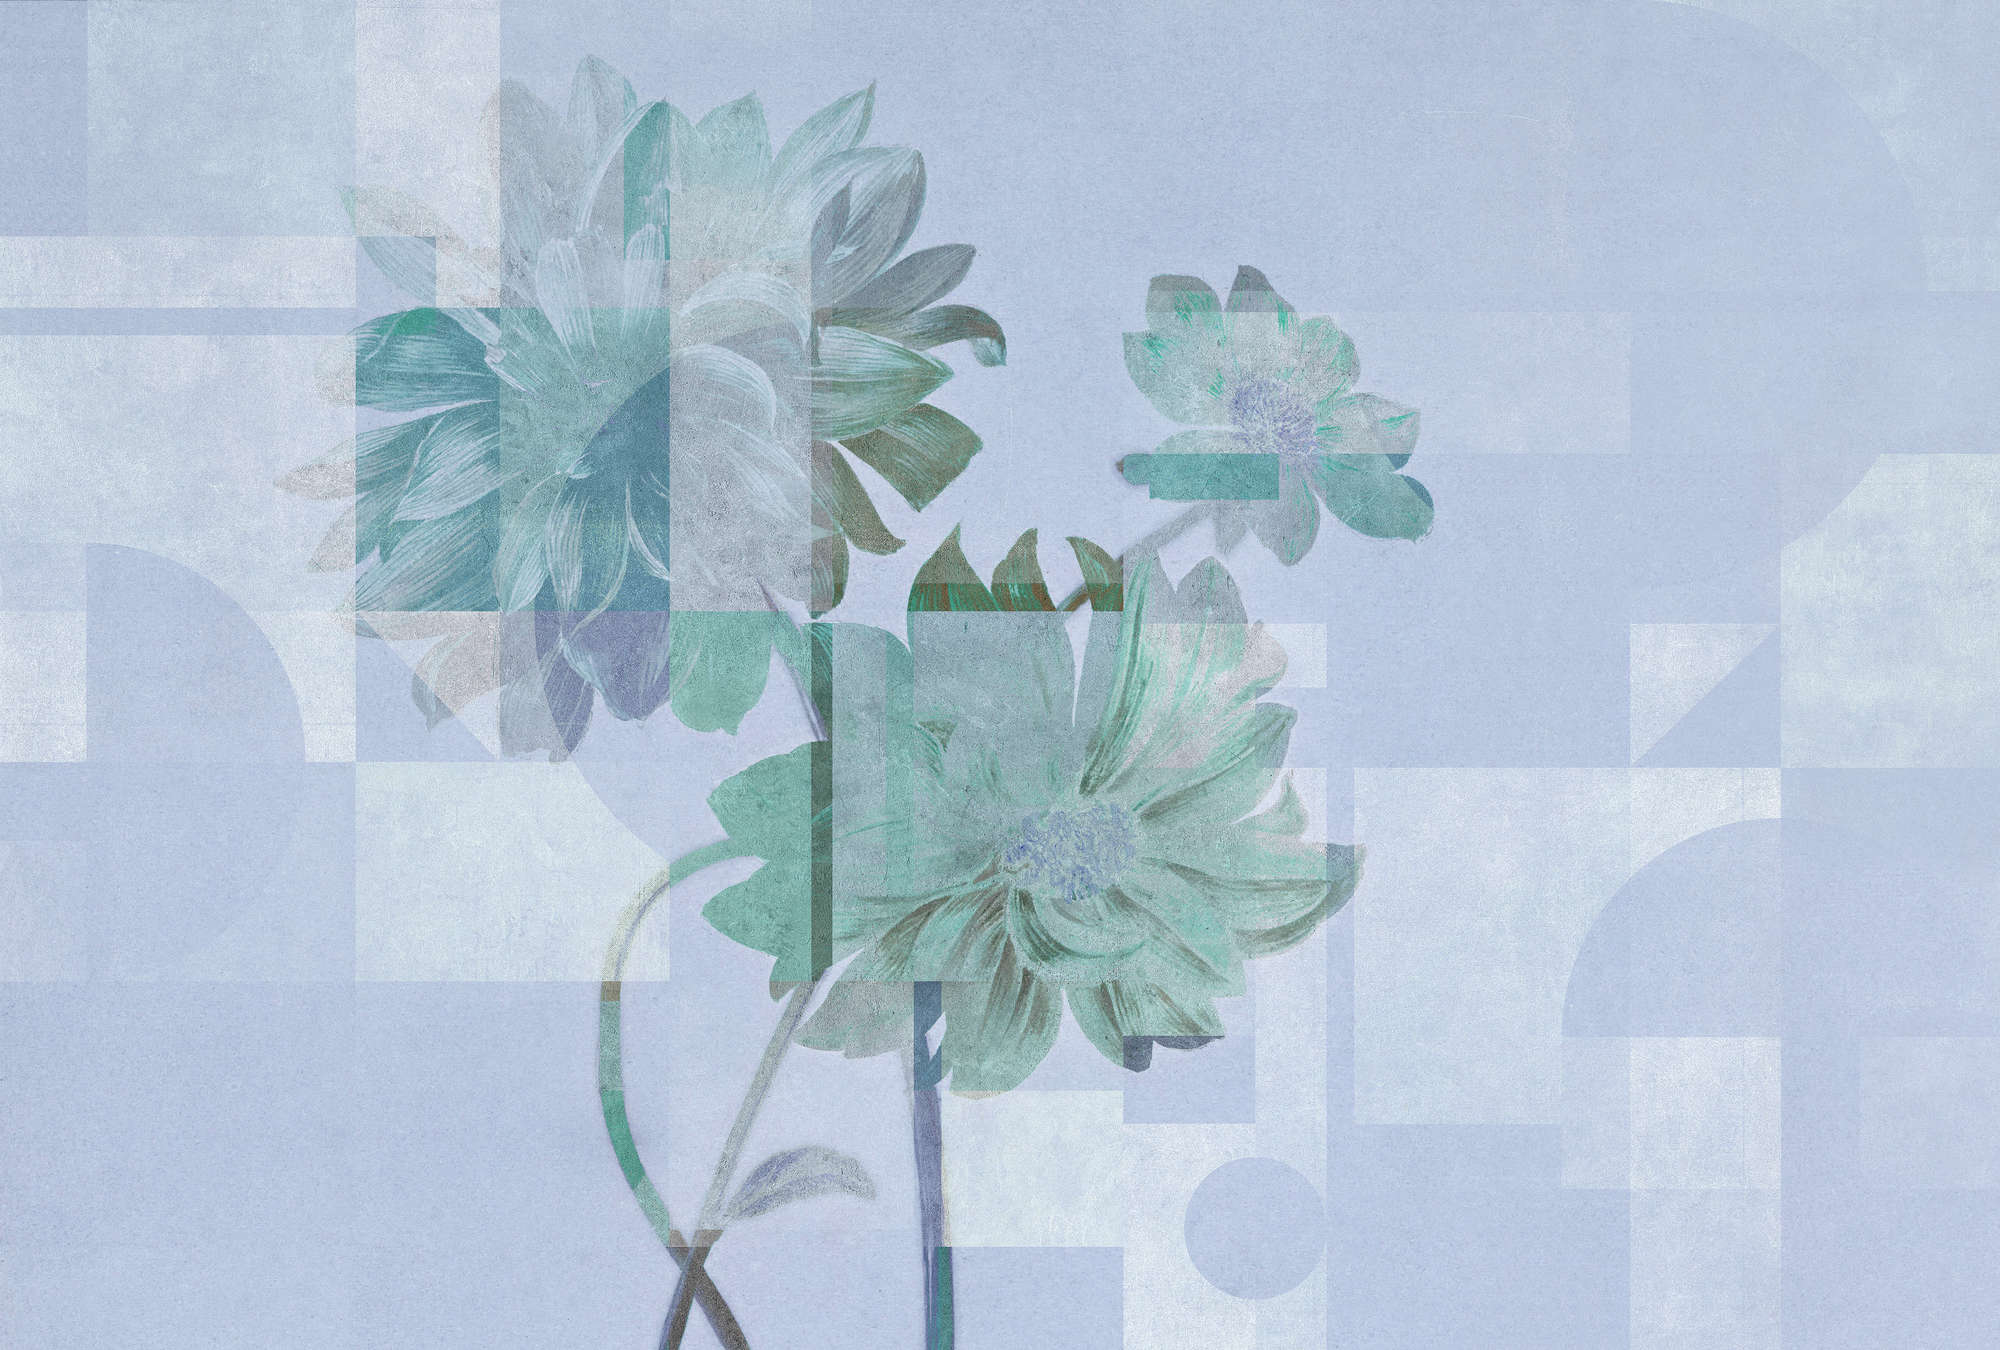             Queens Garden 1 - papier peint fleuri margarites bleues & motifs graphiques
        